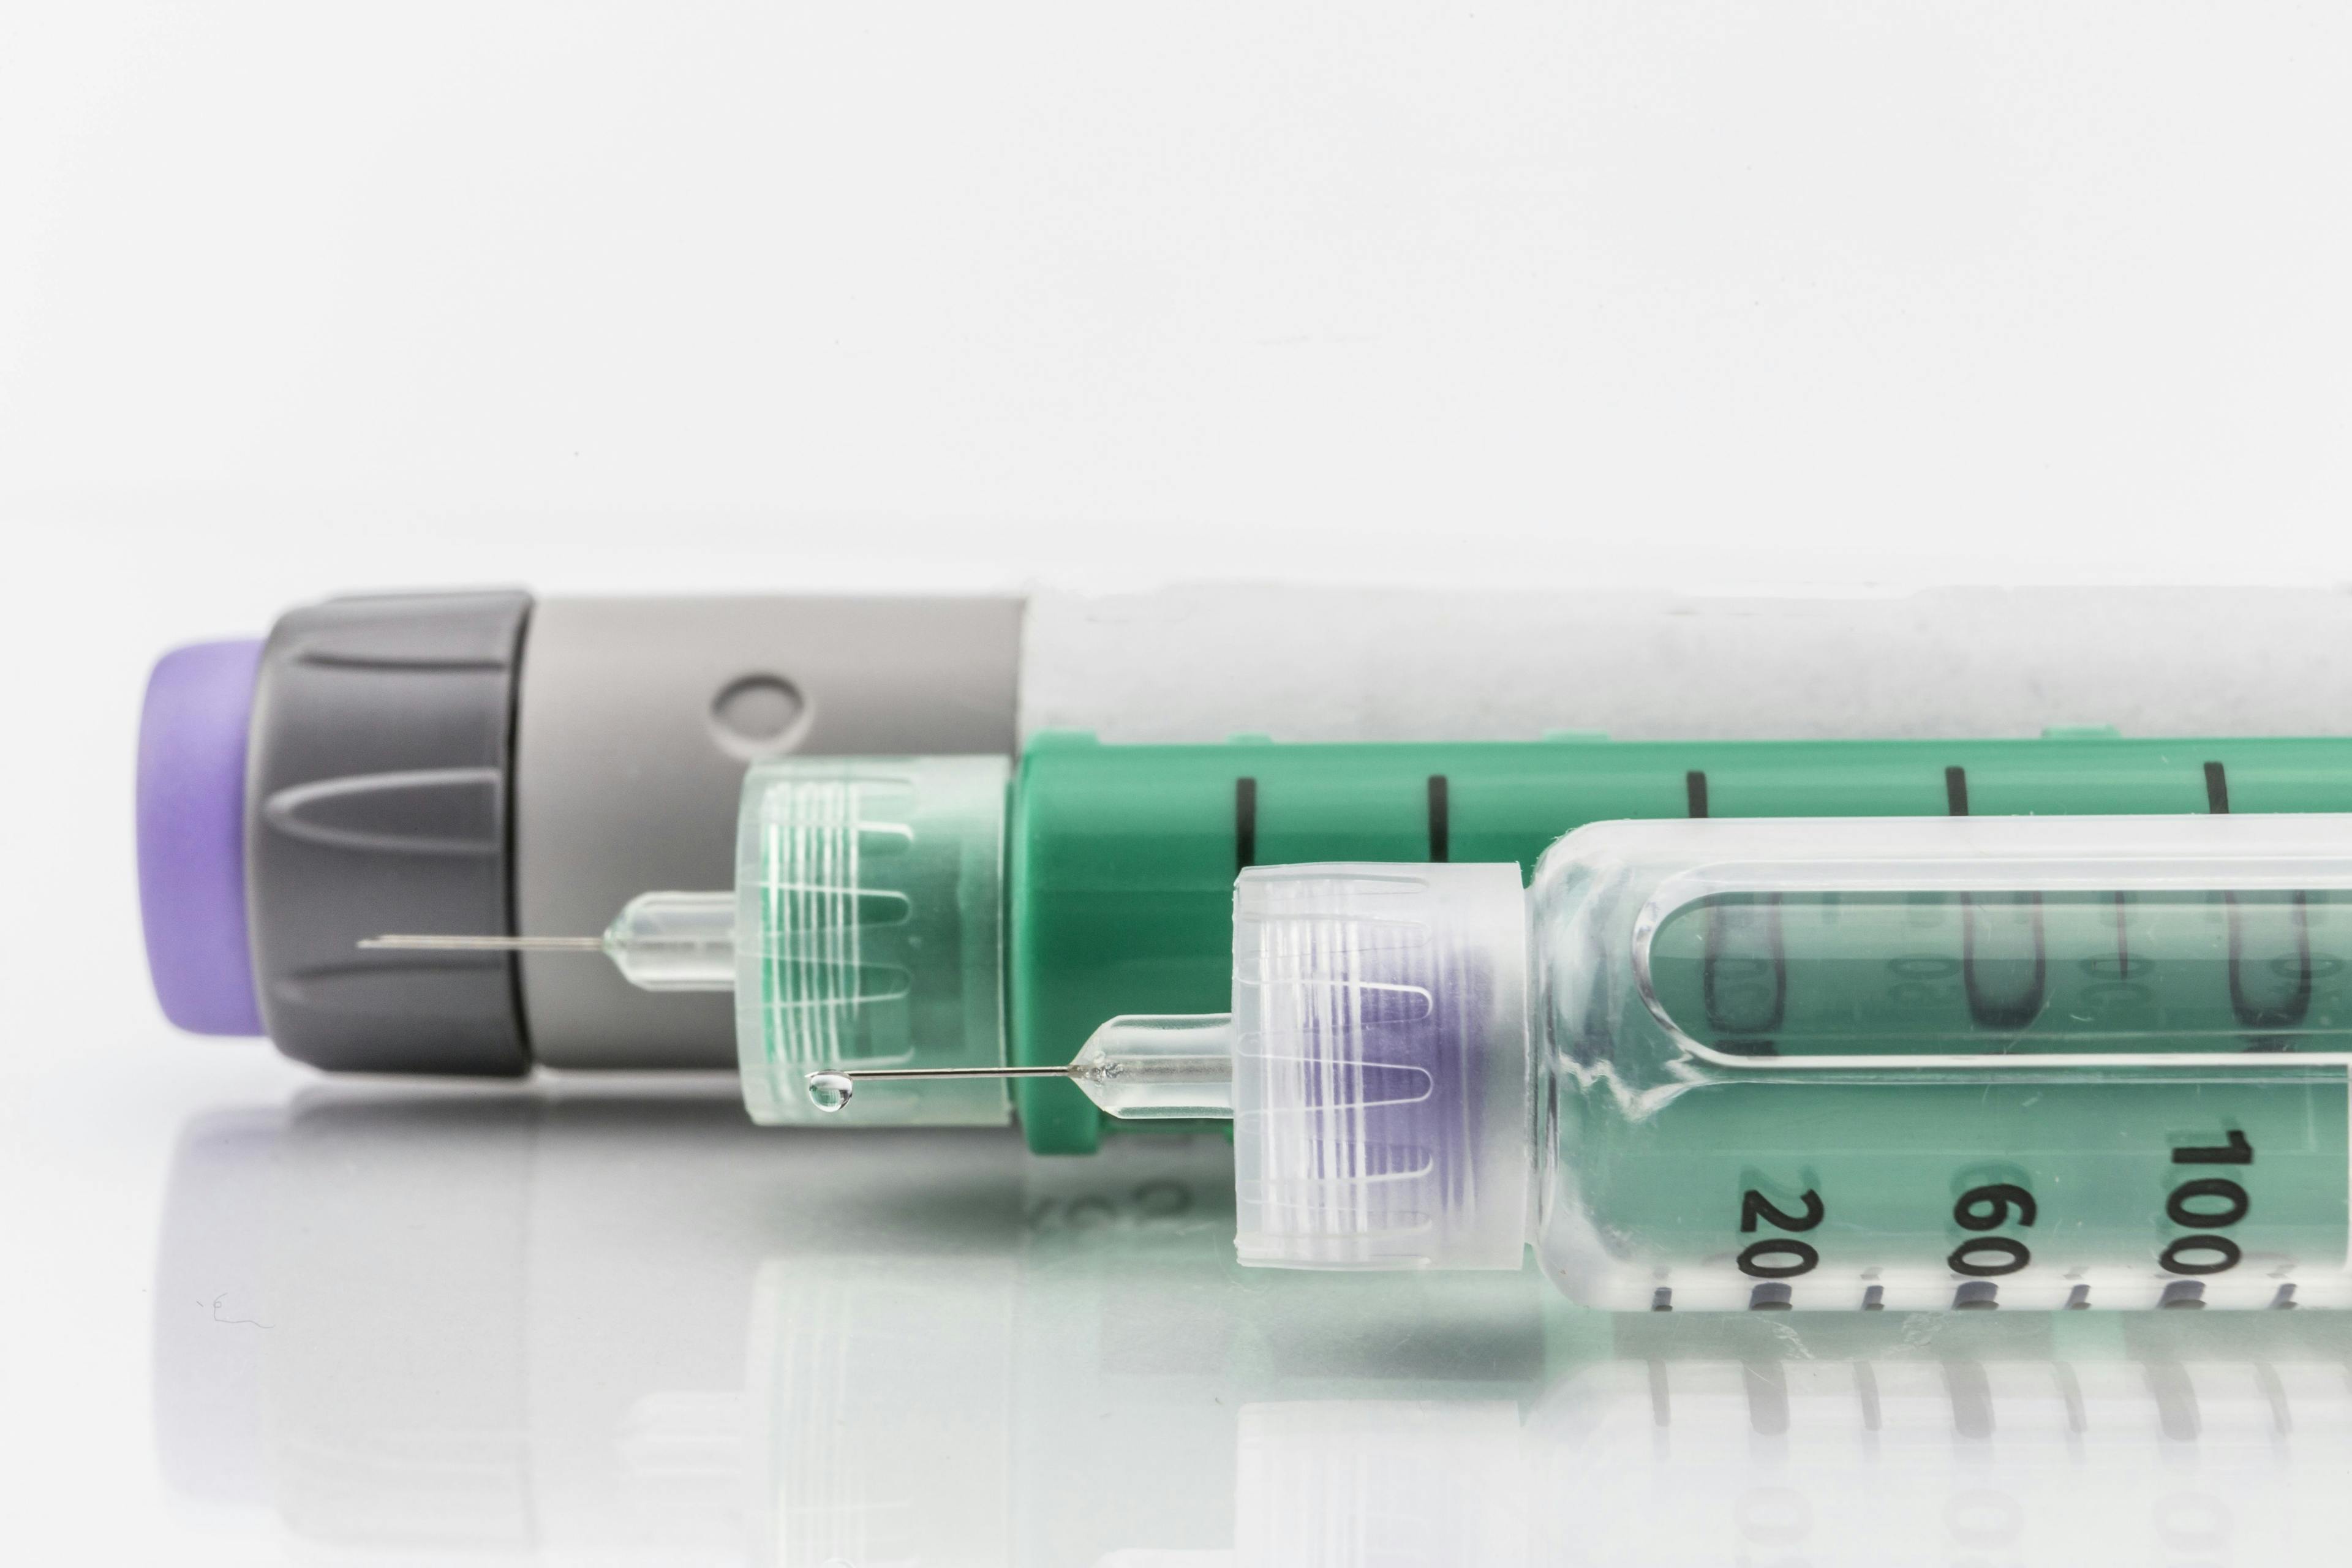 Insulin injection needles